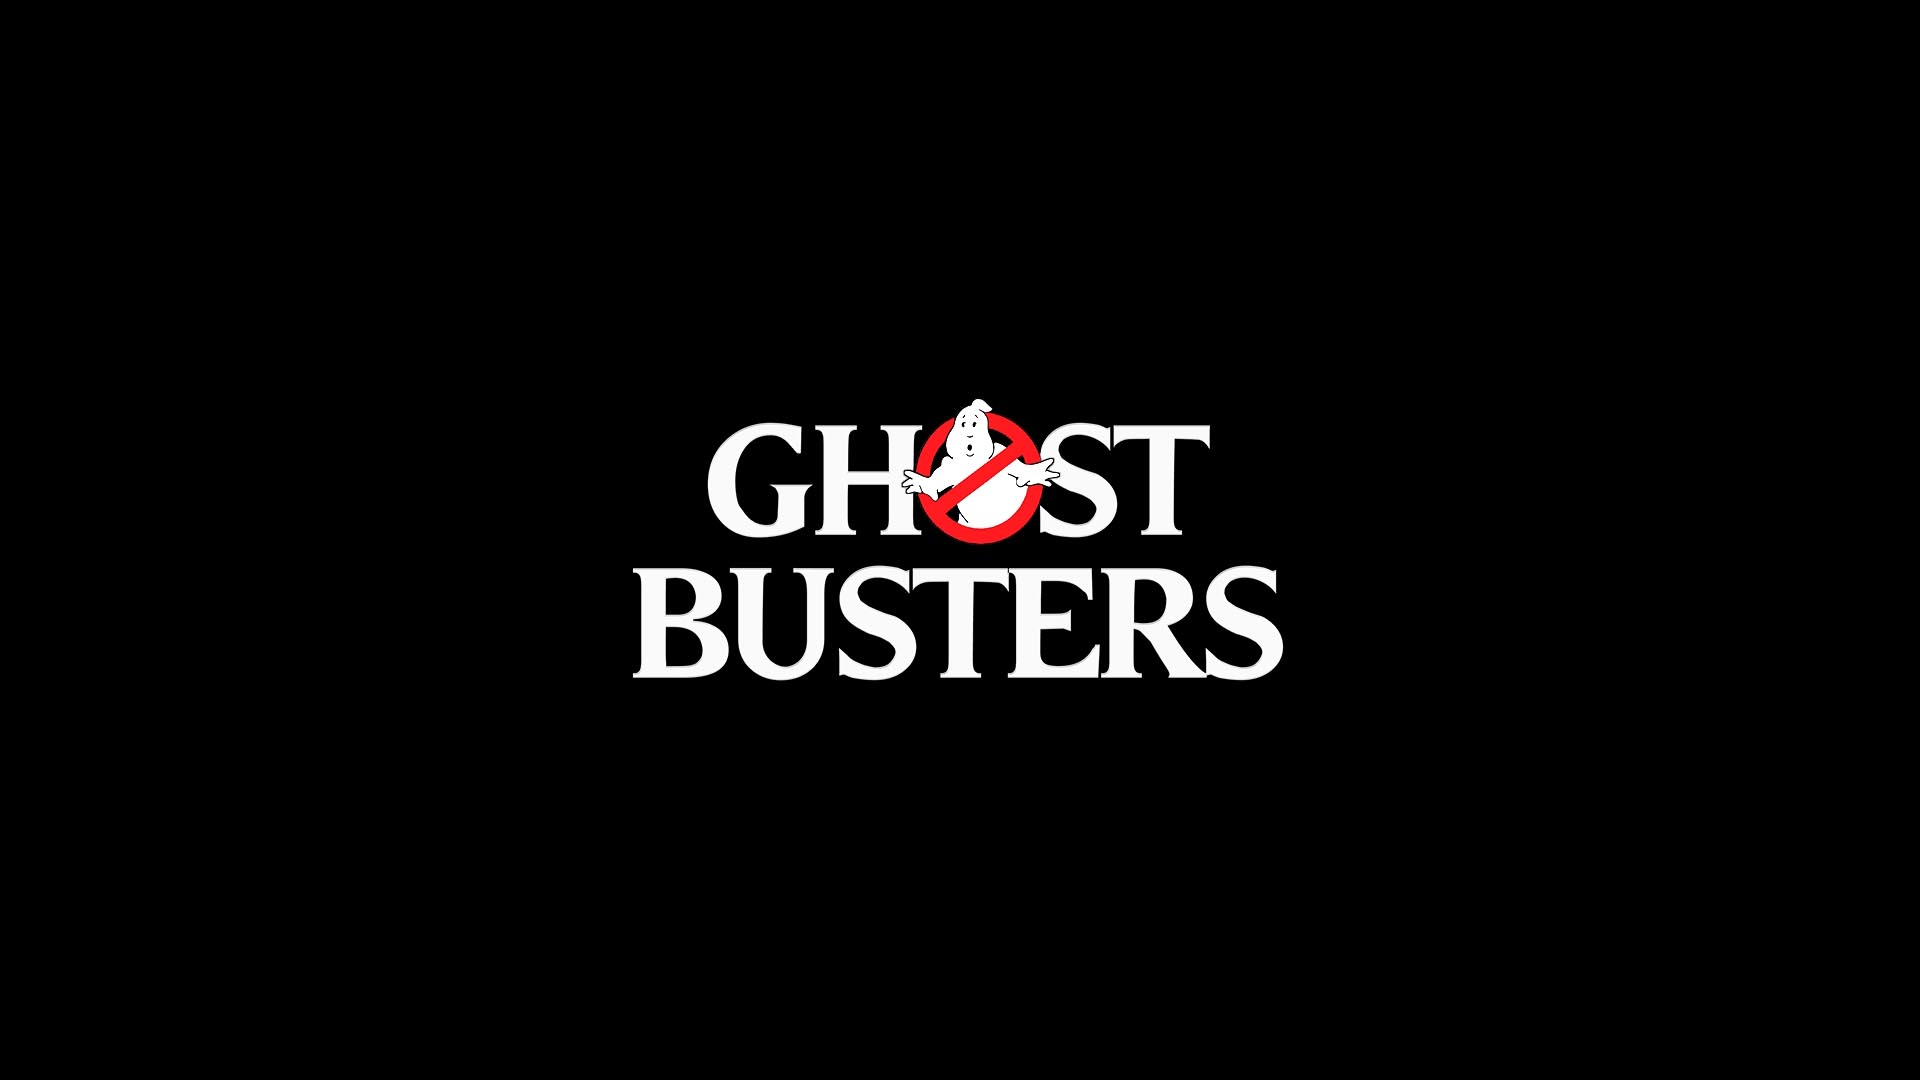 Ghostbusters Computer Wallpapers, Desktop Backgrounds | 1920x1080 ...